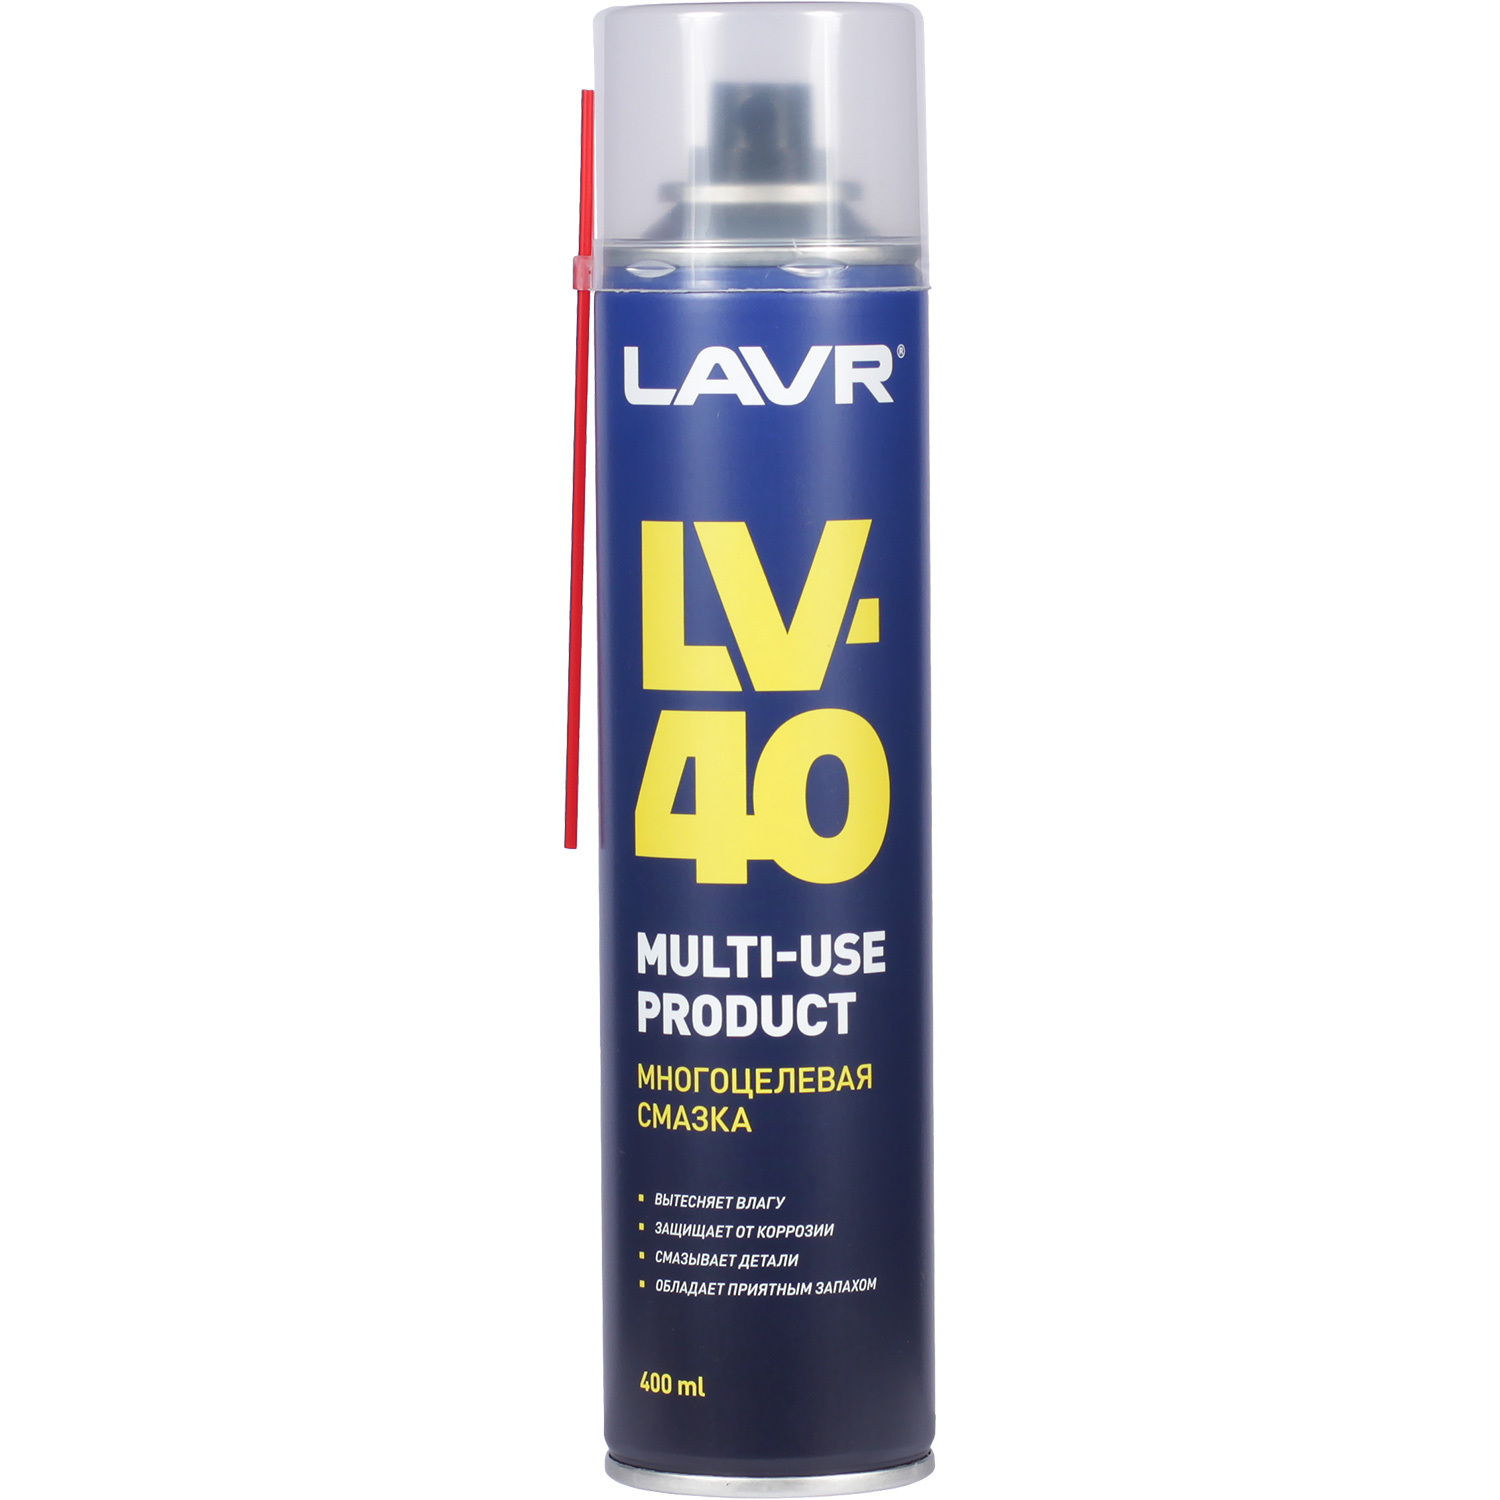 Lavr Многоцелевая смазка LV-40 LAVR Ln 1485 lavr многоцелевая смазка lv 40 lavr ln 1485